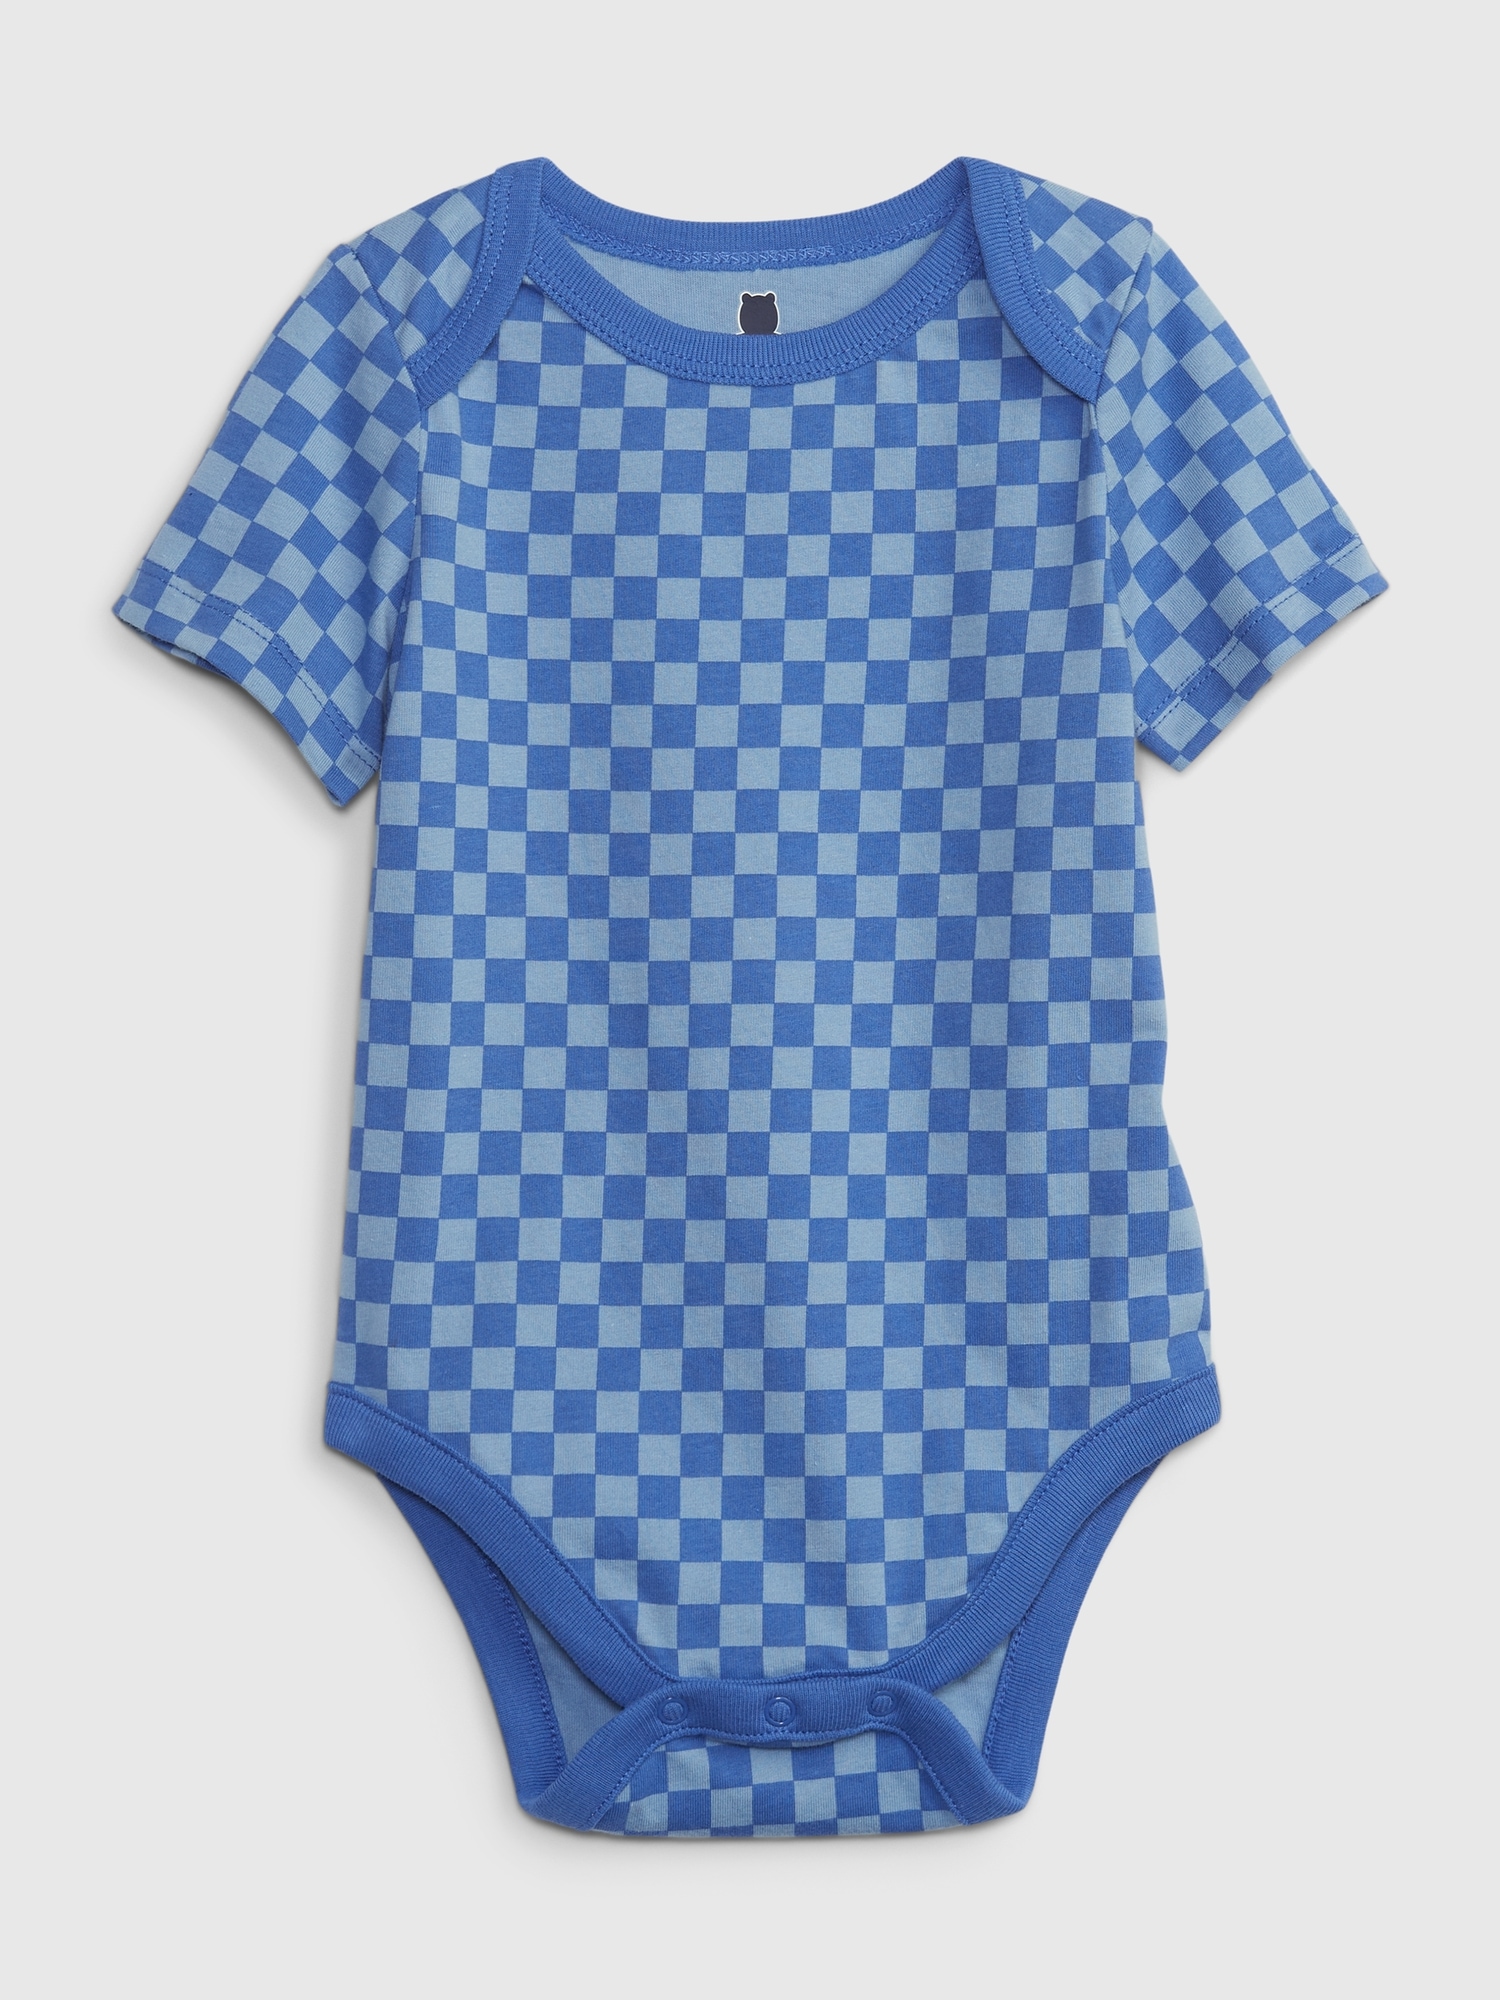 Gap Baby 100% Organic Cotton Mix and Match Graphic Bodysuit blue. 1